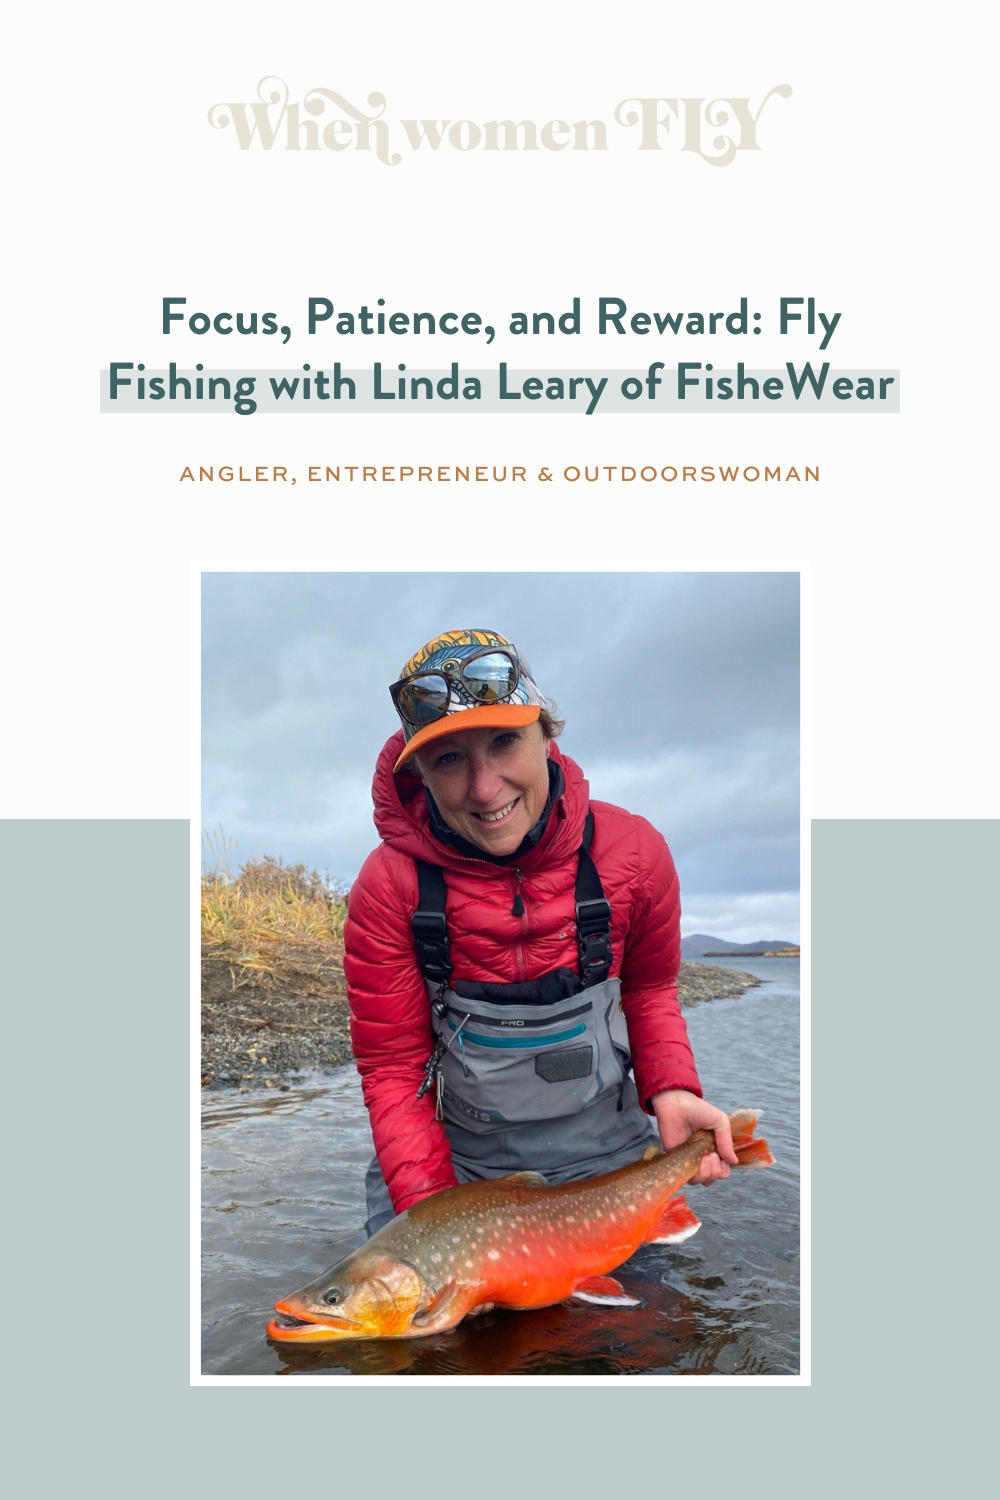 FisheWear Makes Women's Fly-Fishing Apparel